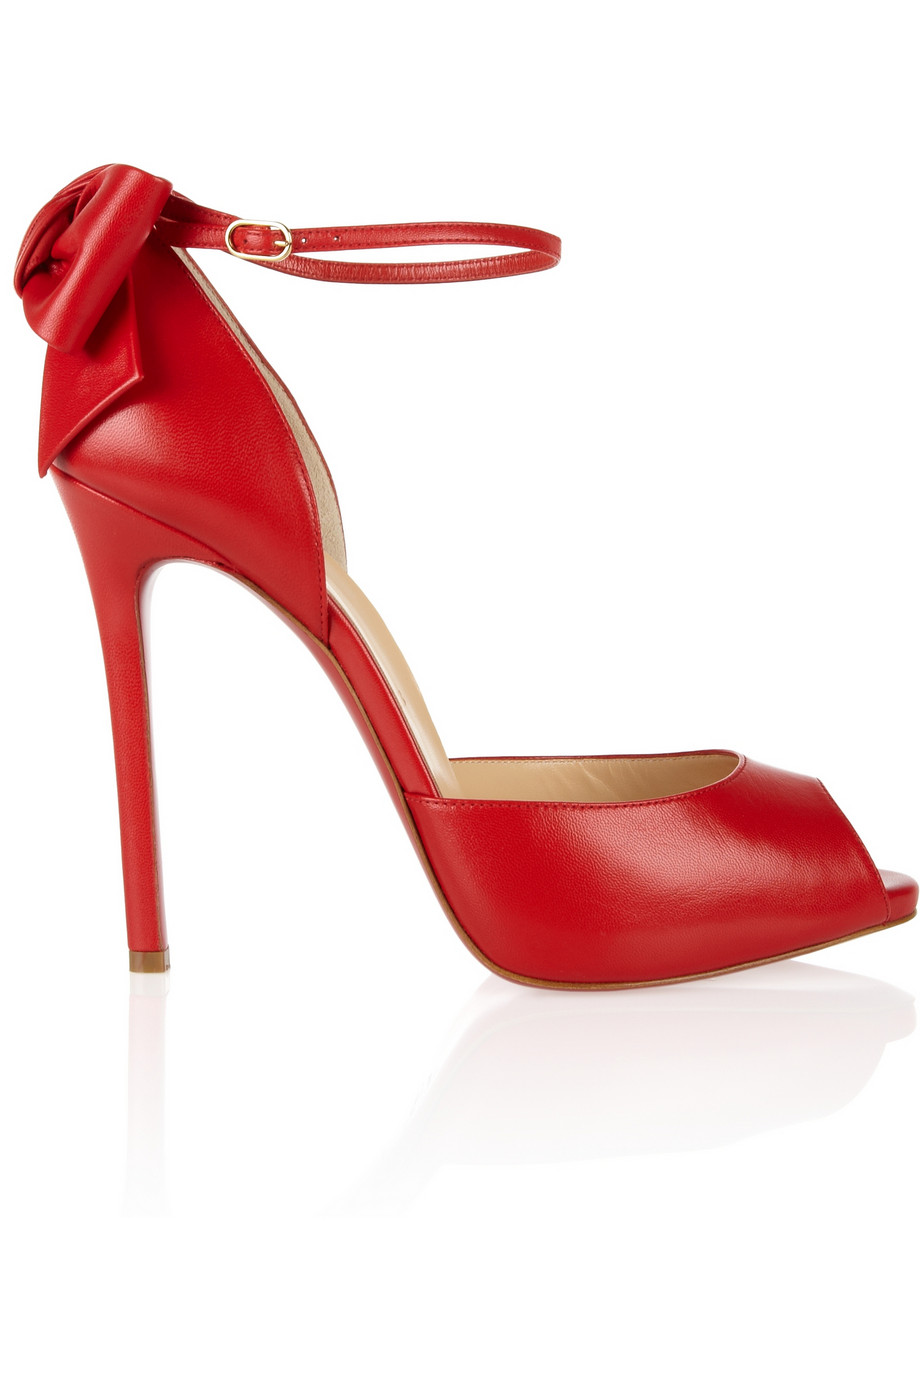 cheap louis vuitton men shoes - Shoeniverse: CHRISTIAN LOUBOUTIN Red Noeud 120 Bow Embellished ...